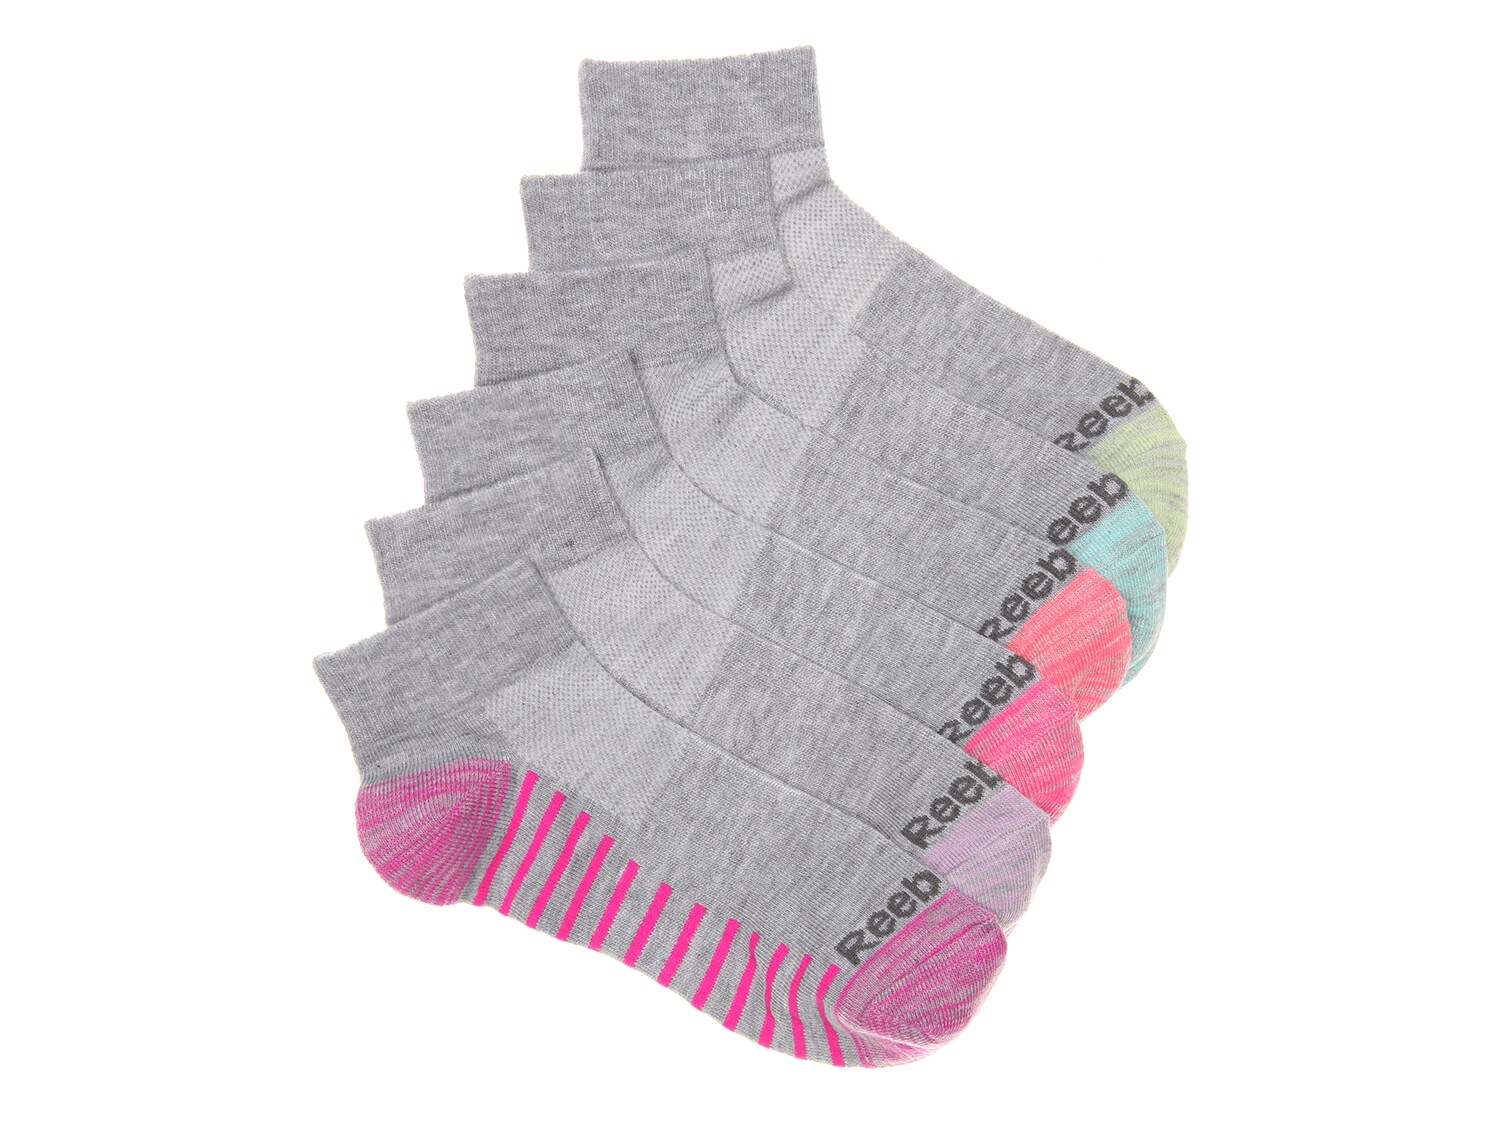 reebok women's quarter socks